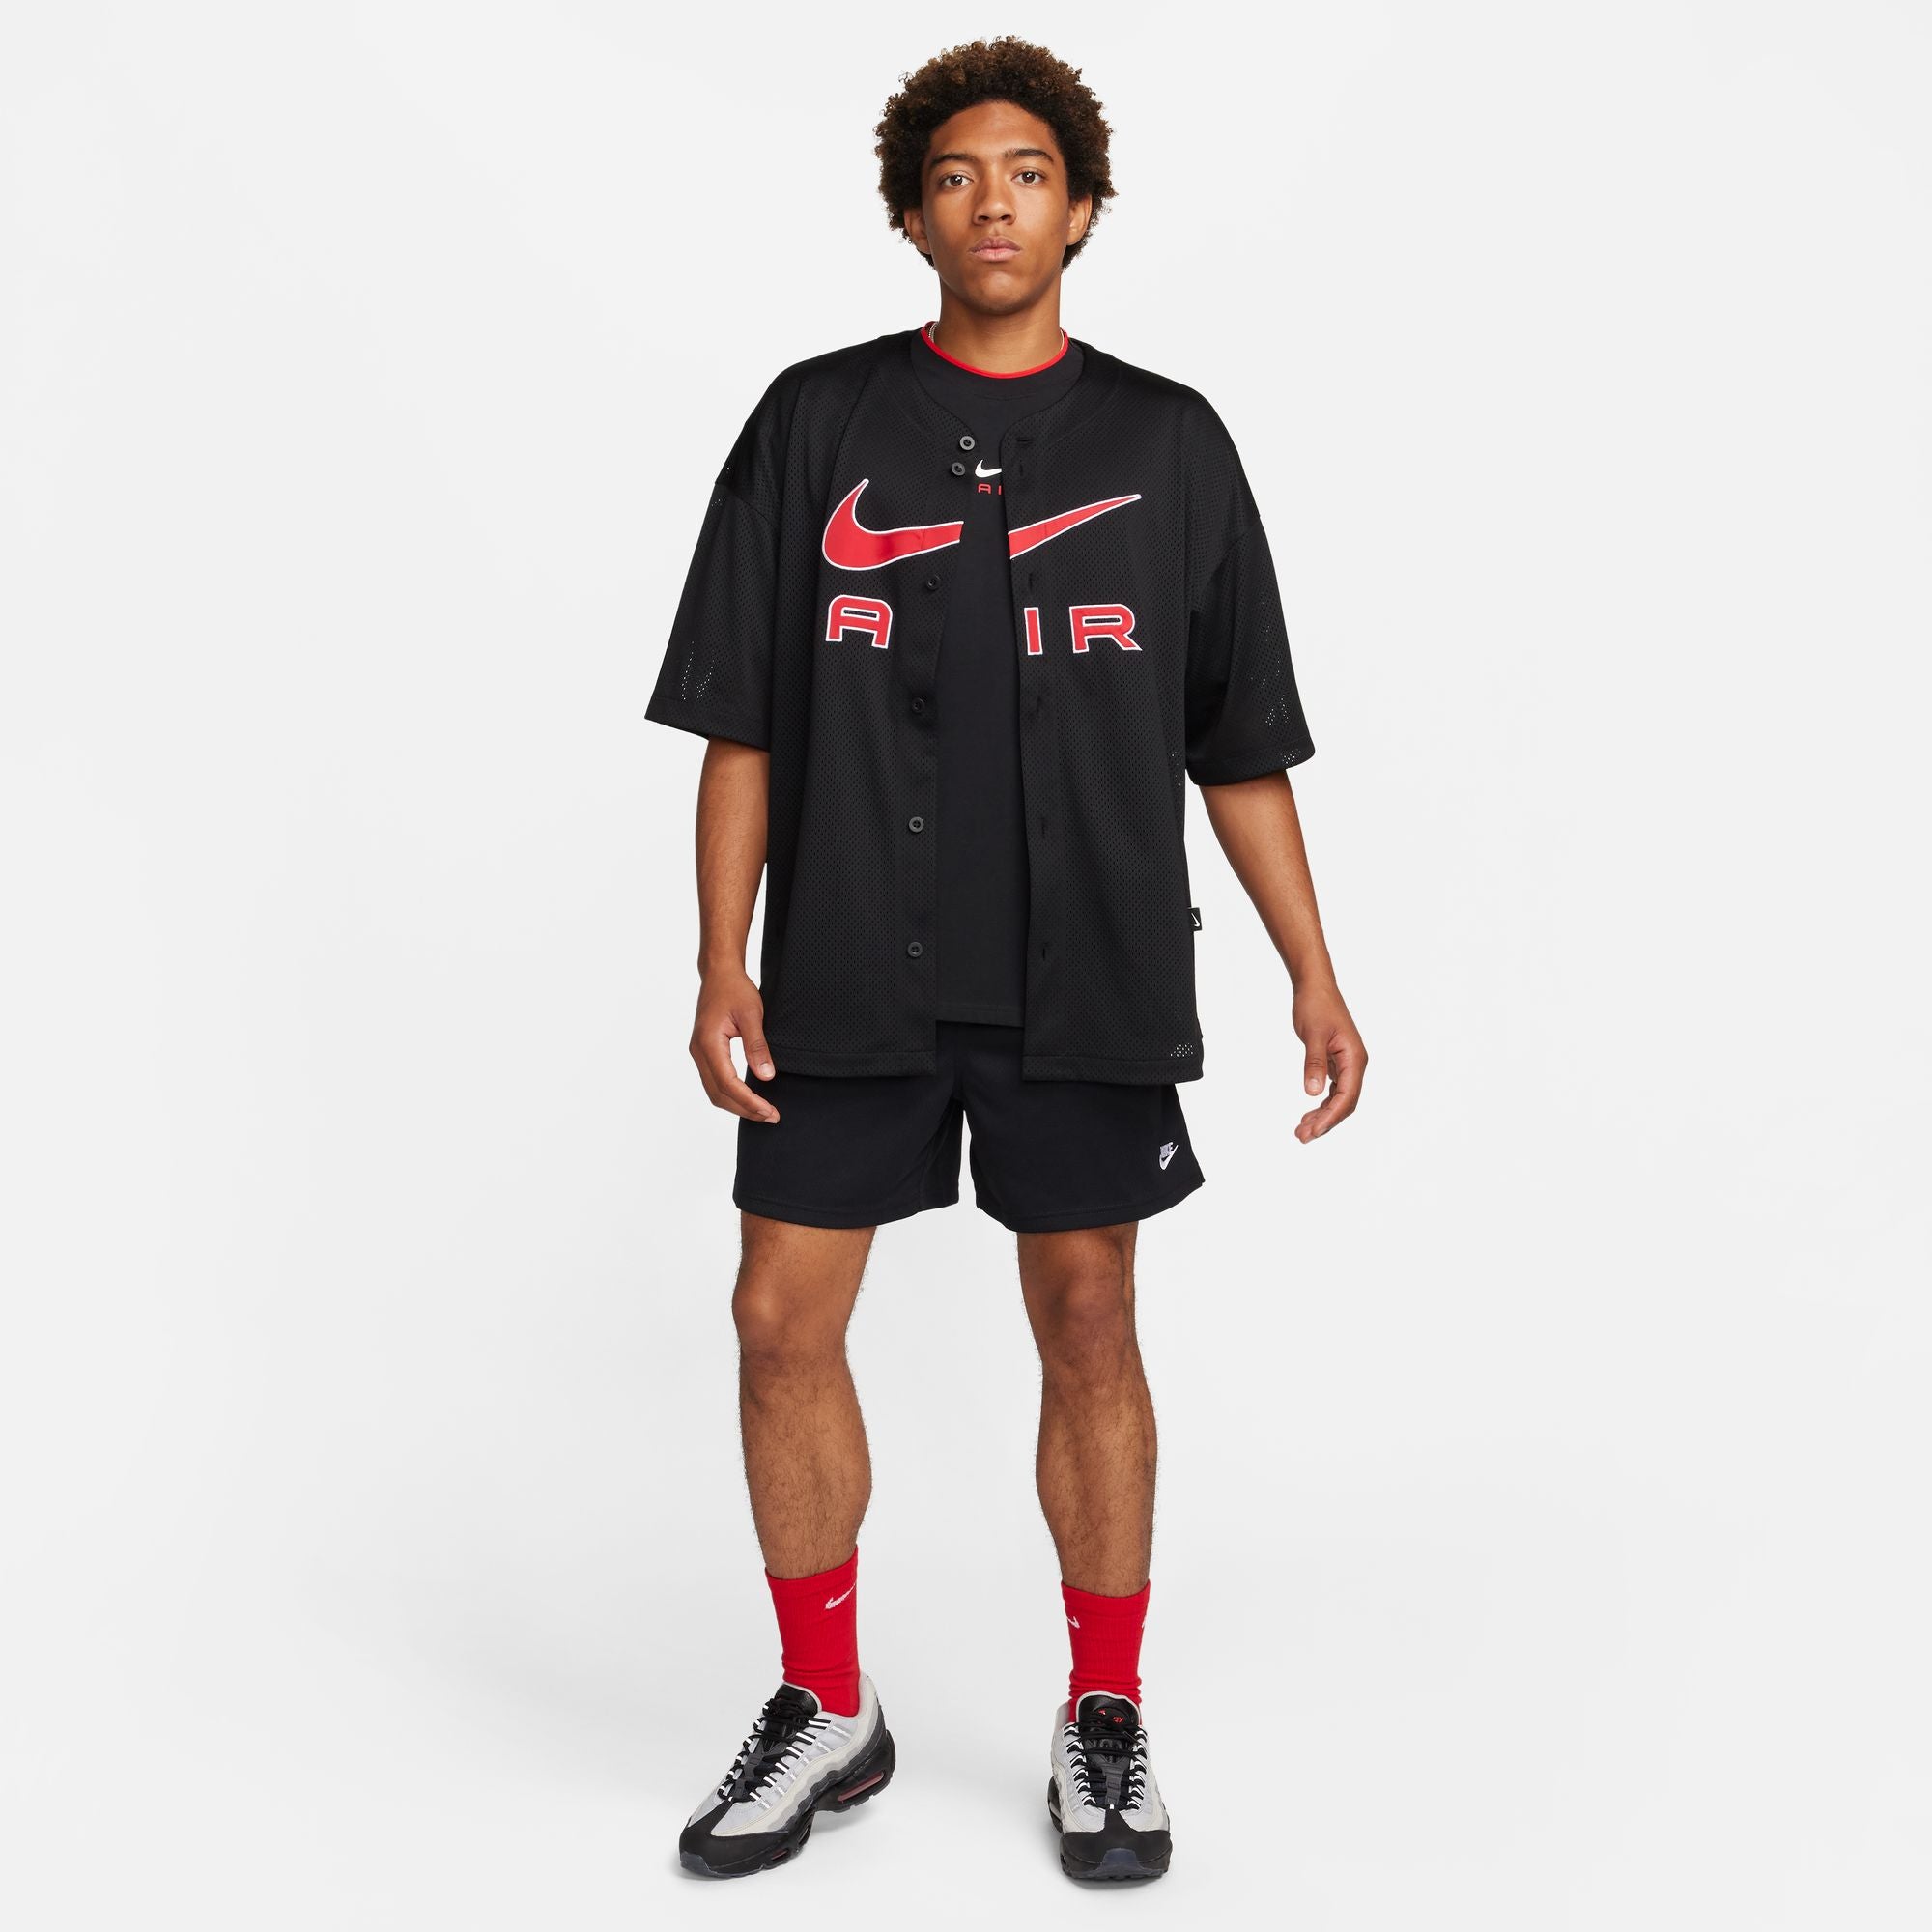 Nike Club Men's Mesh Flow Shorts